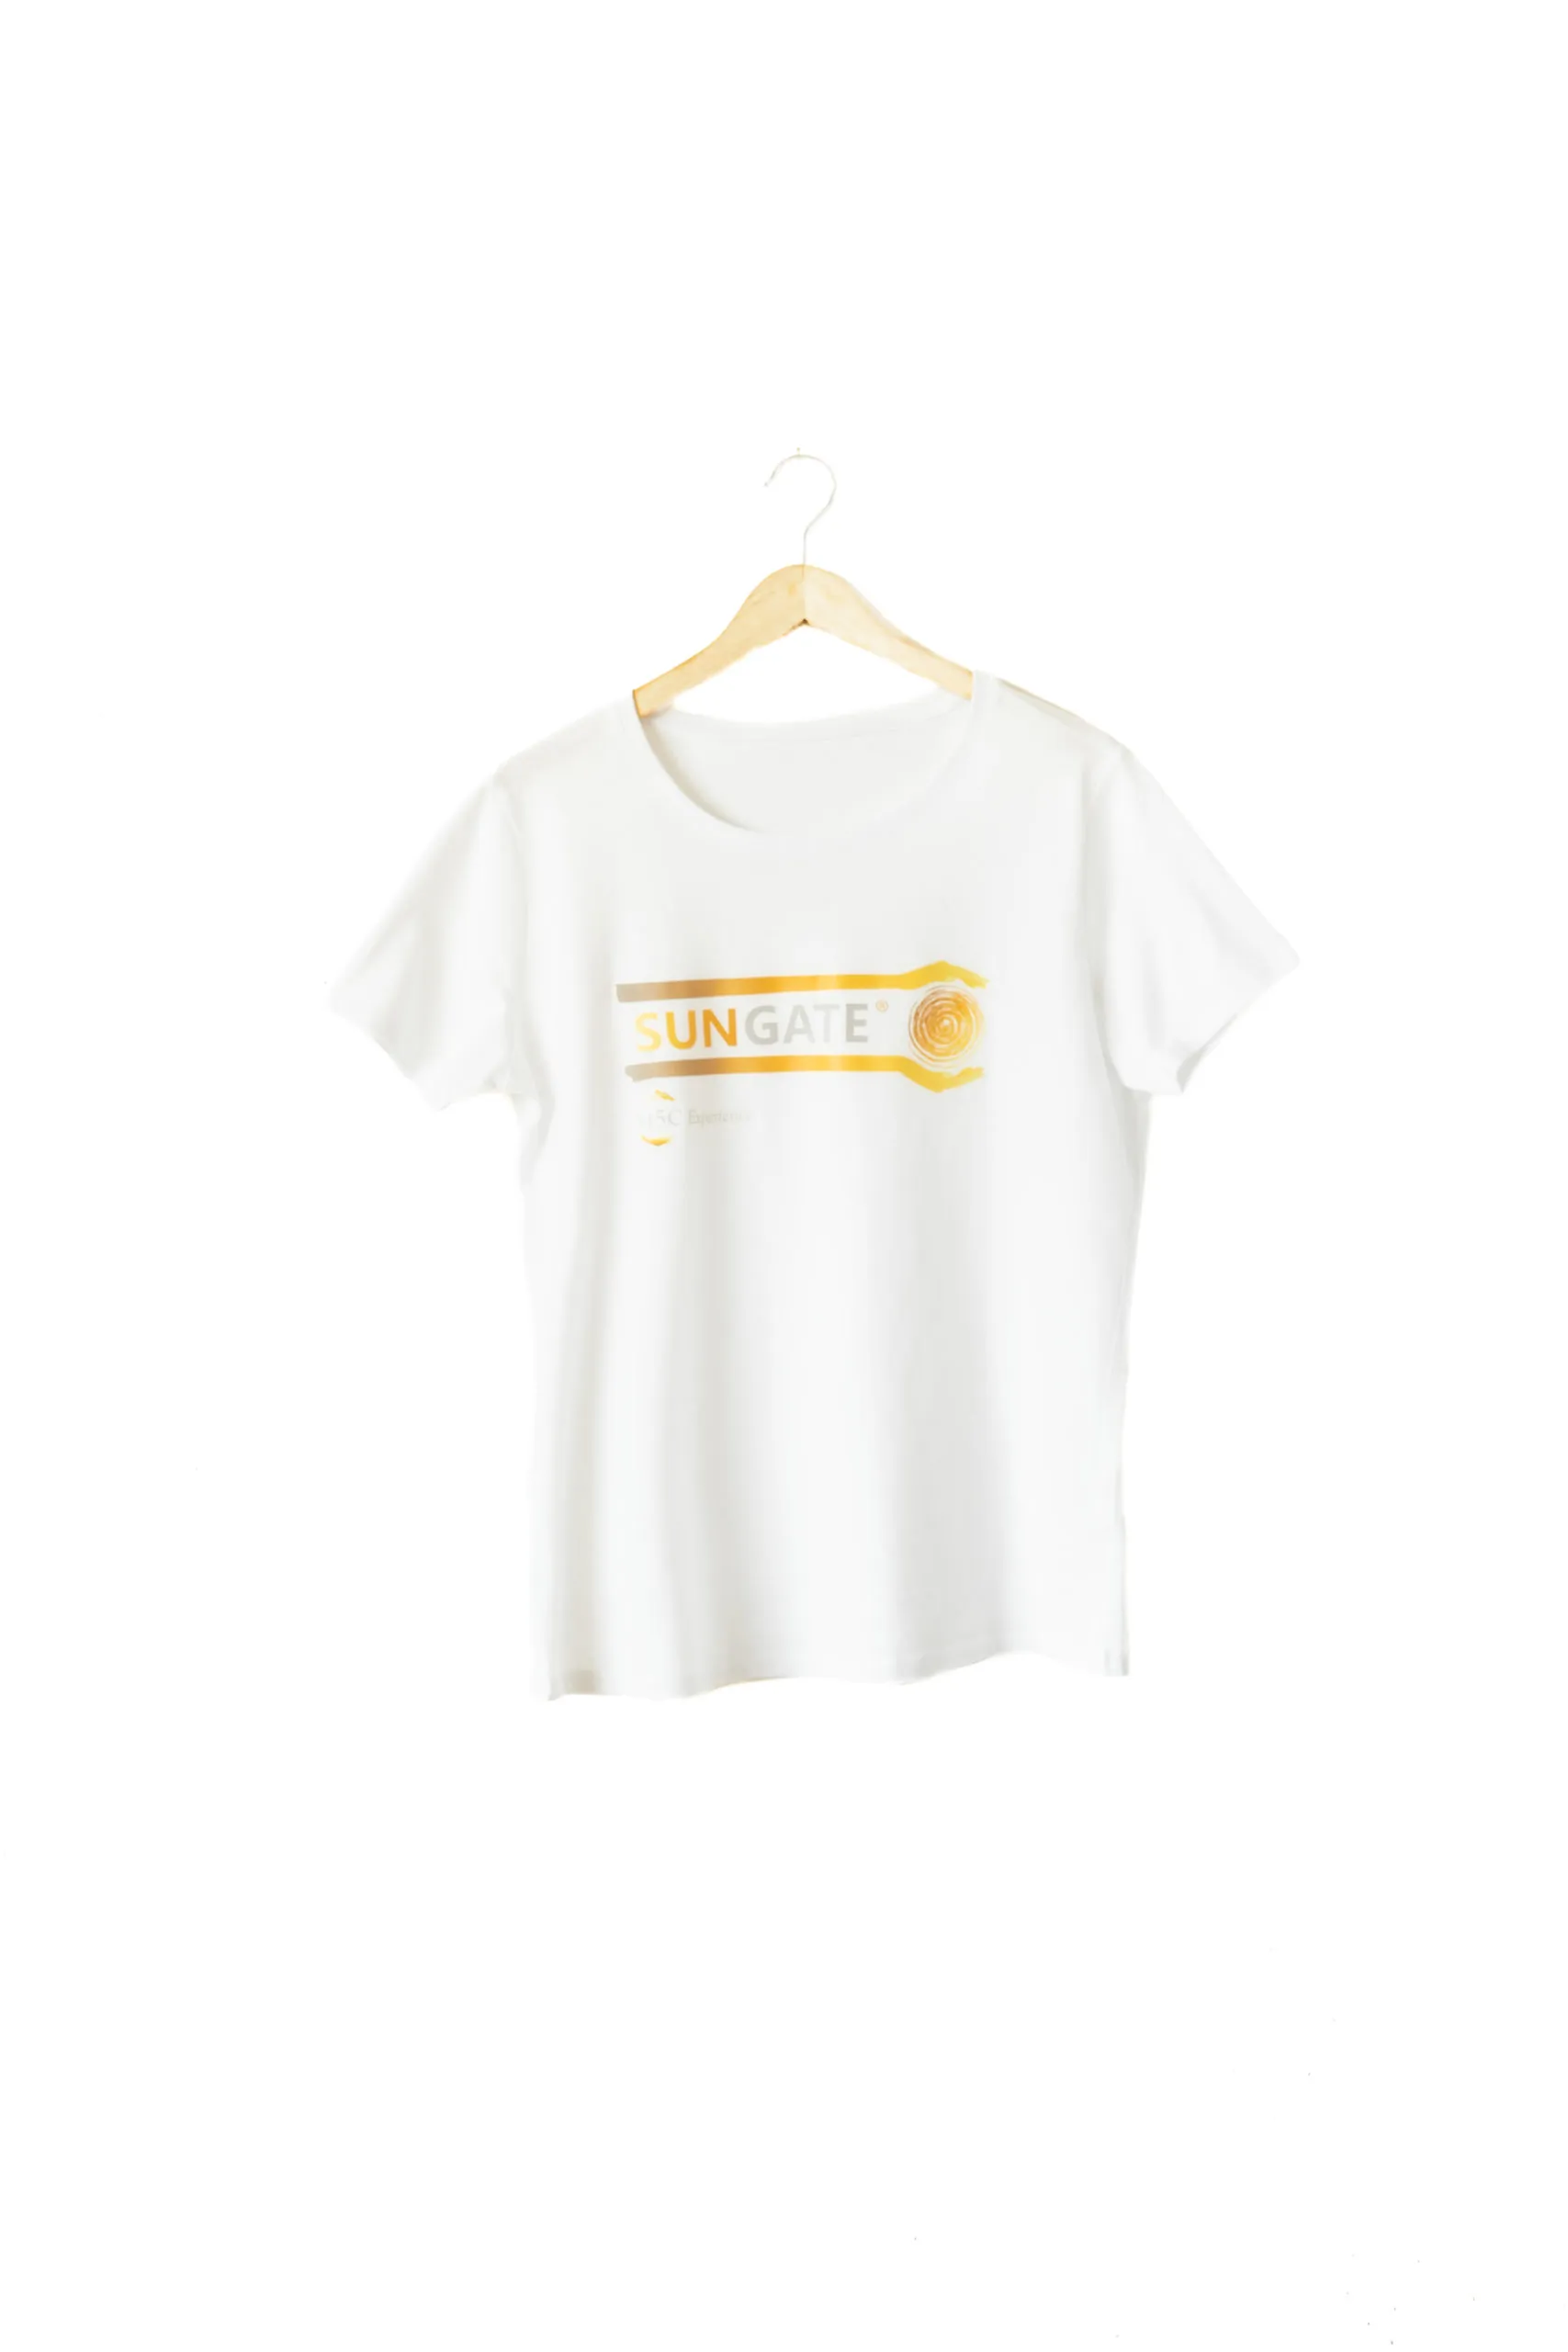 T-shirt femme Sungate blanc aromalchimie